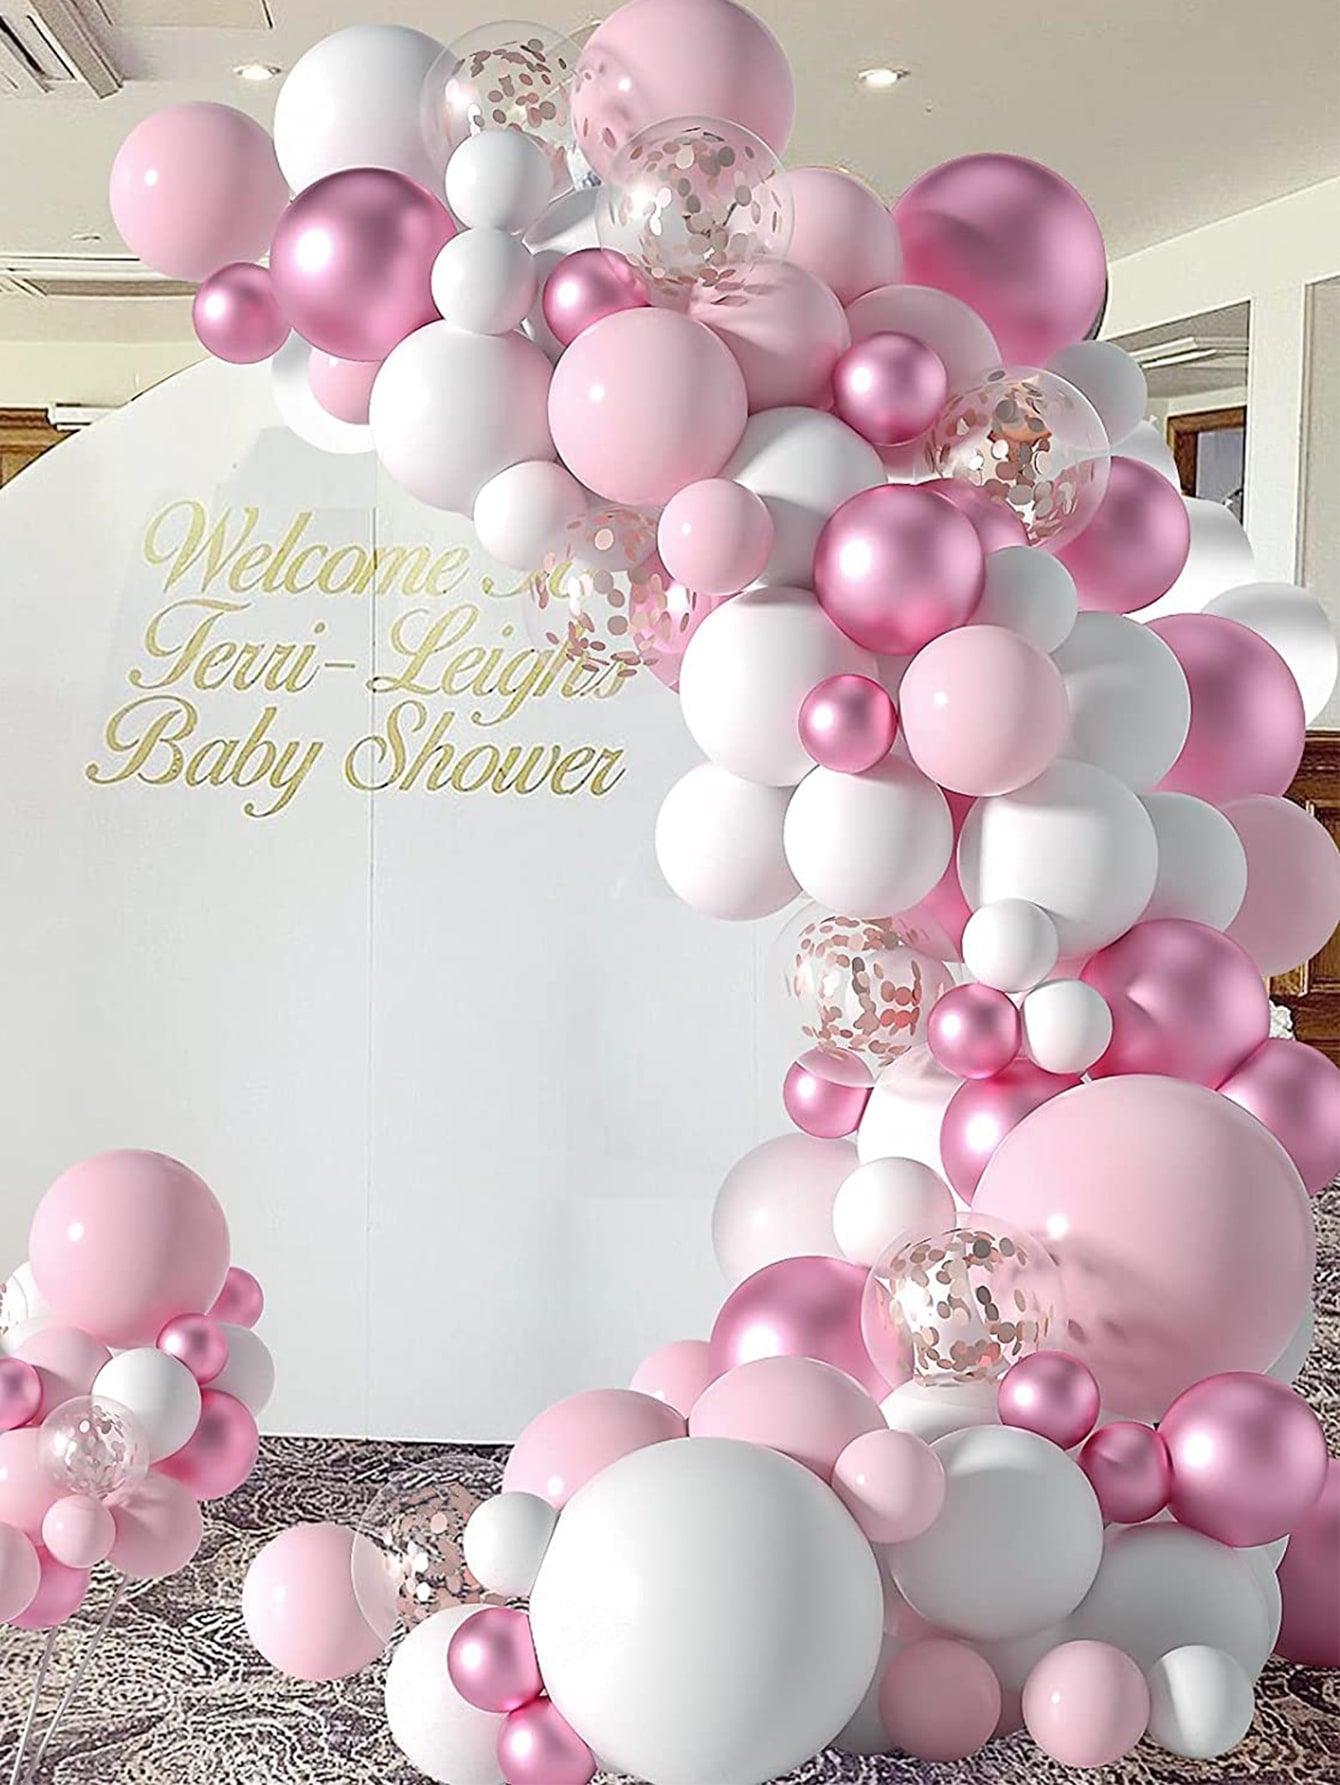 117pcs Balloon Garland Decoration - Decotree.co Online Shop